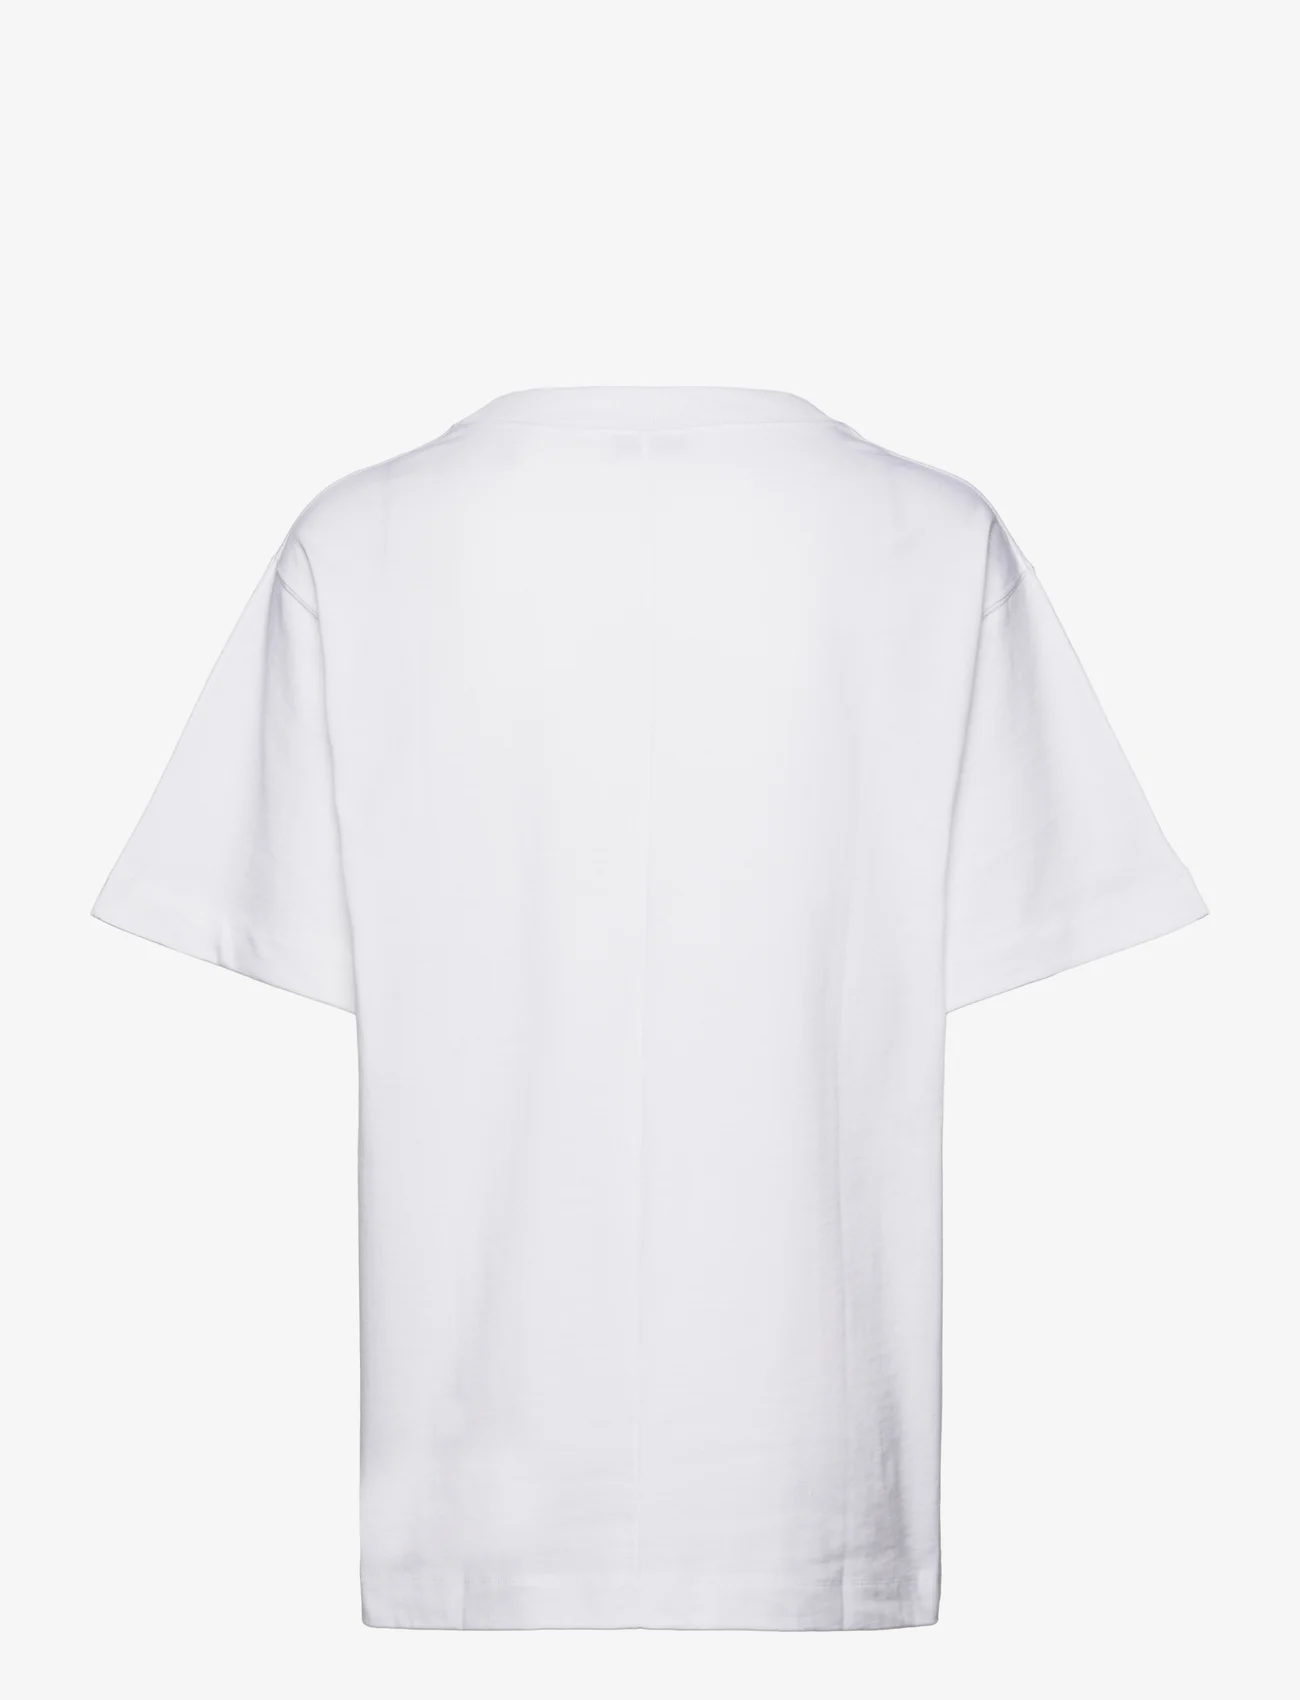 House Of Dagmar - OVERSIZED COTTON TEE - t-shirts - white - 1